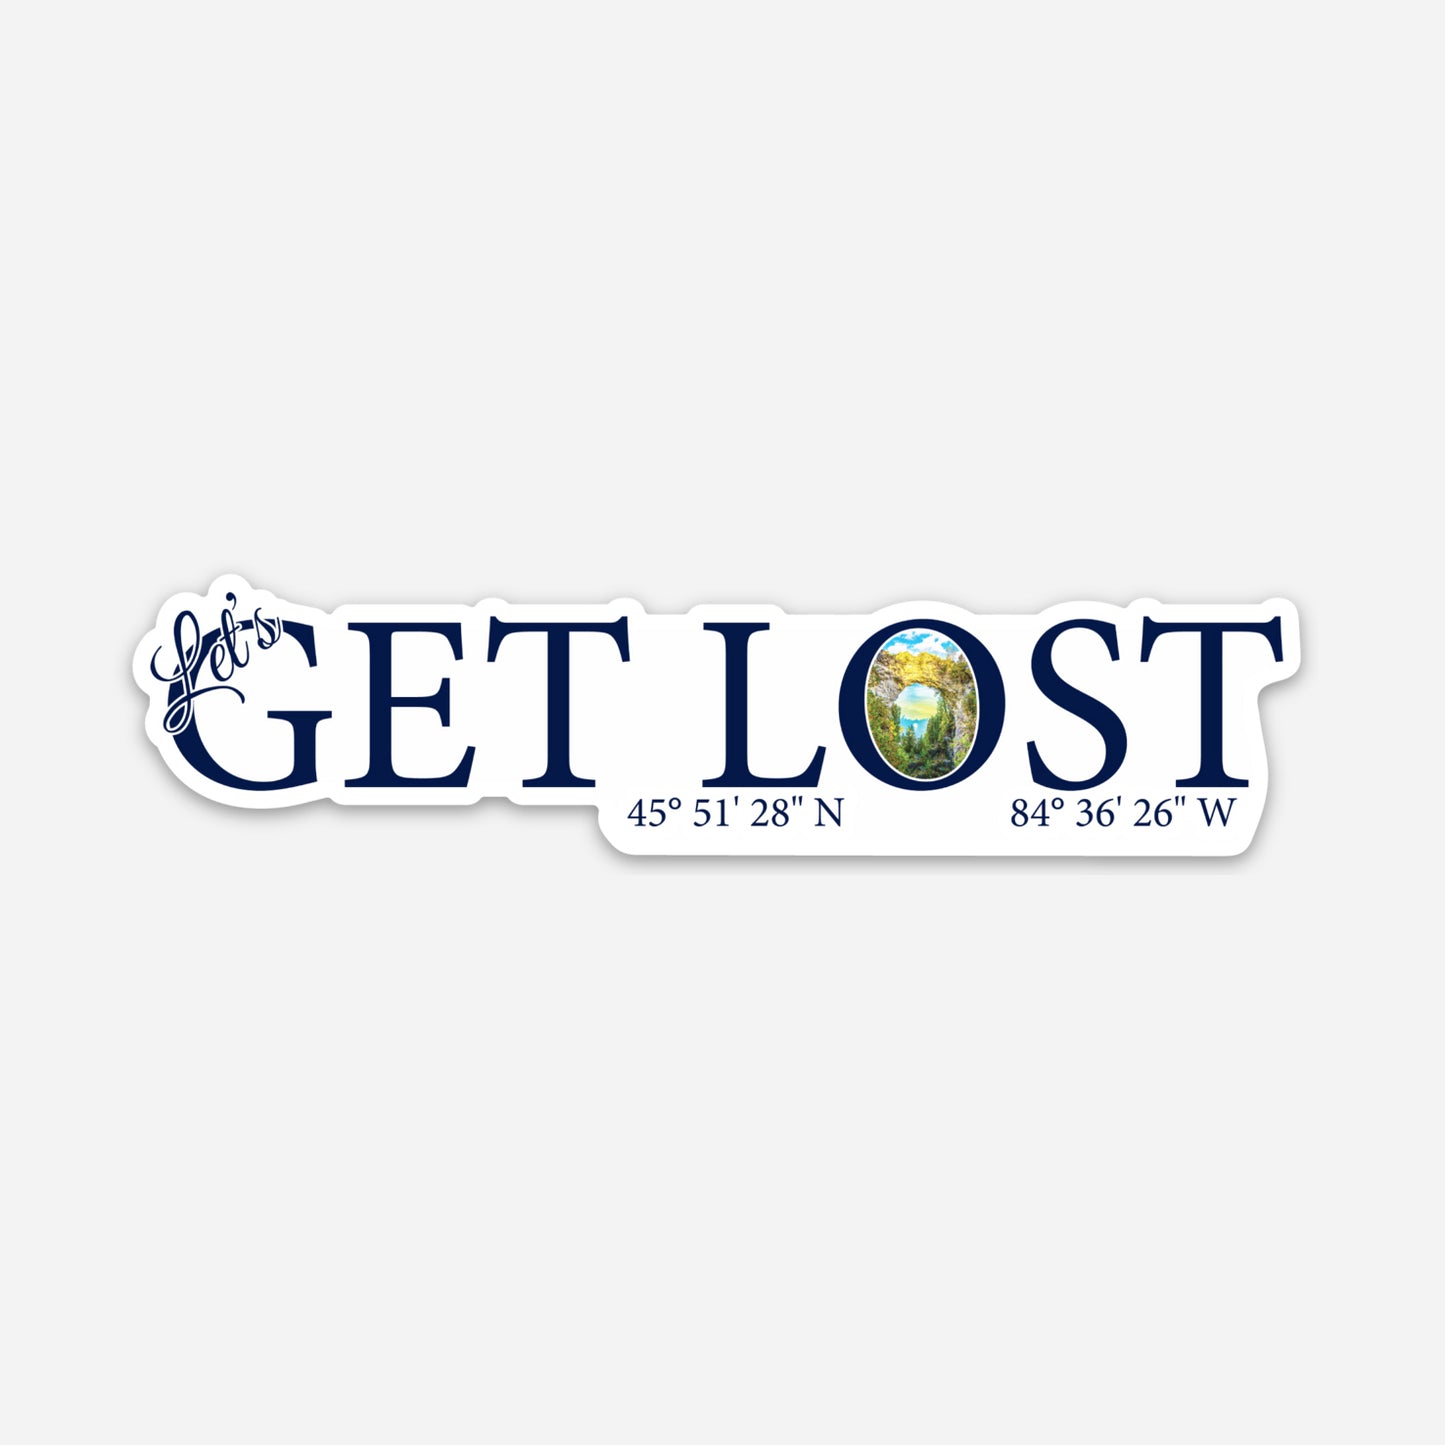 Let's Get Lost on Mackinac Island Vinyl Sticker